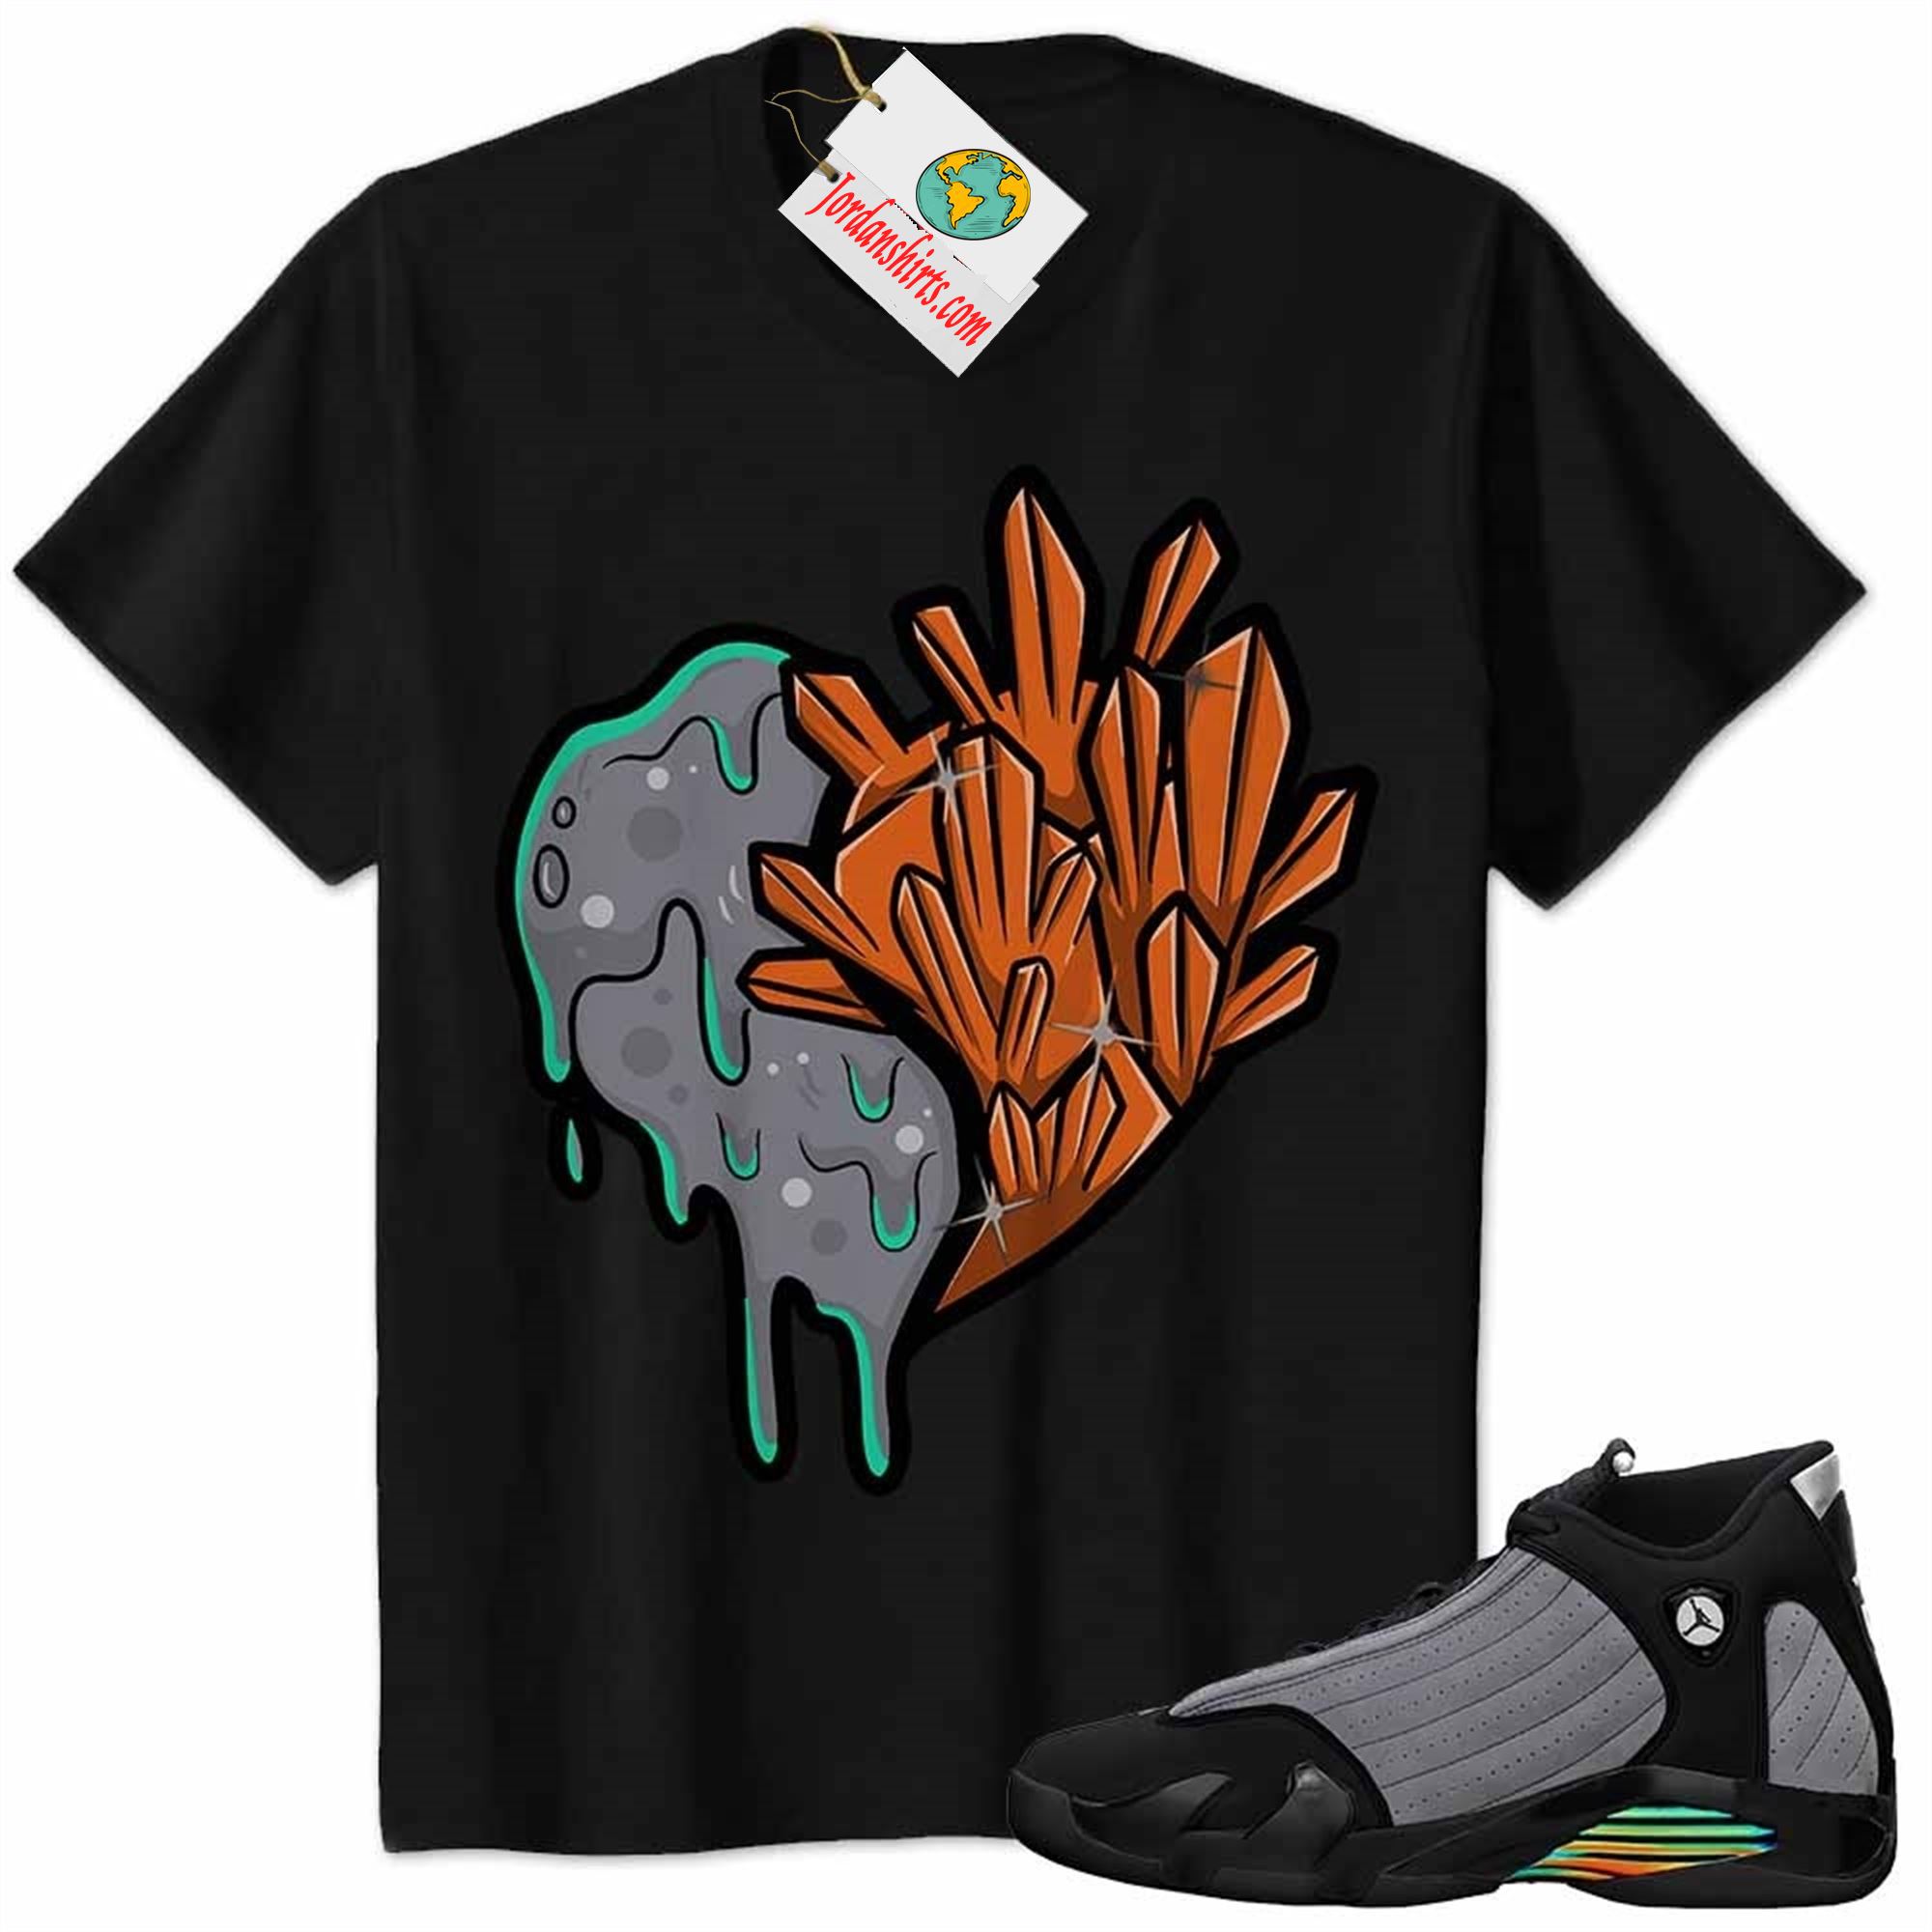 Jordan 14 Shirt, Crystal And Melt Heart Black Air Jordan 14 Particle Grey 14s Size Up To 5xl